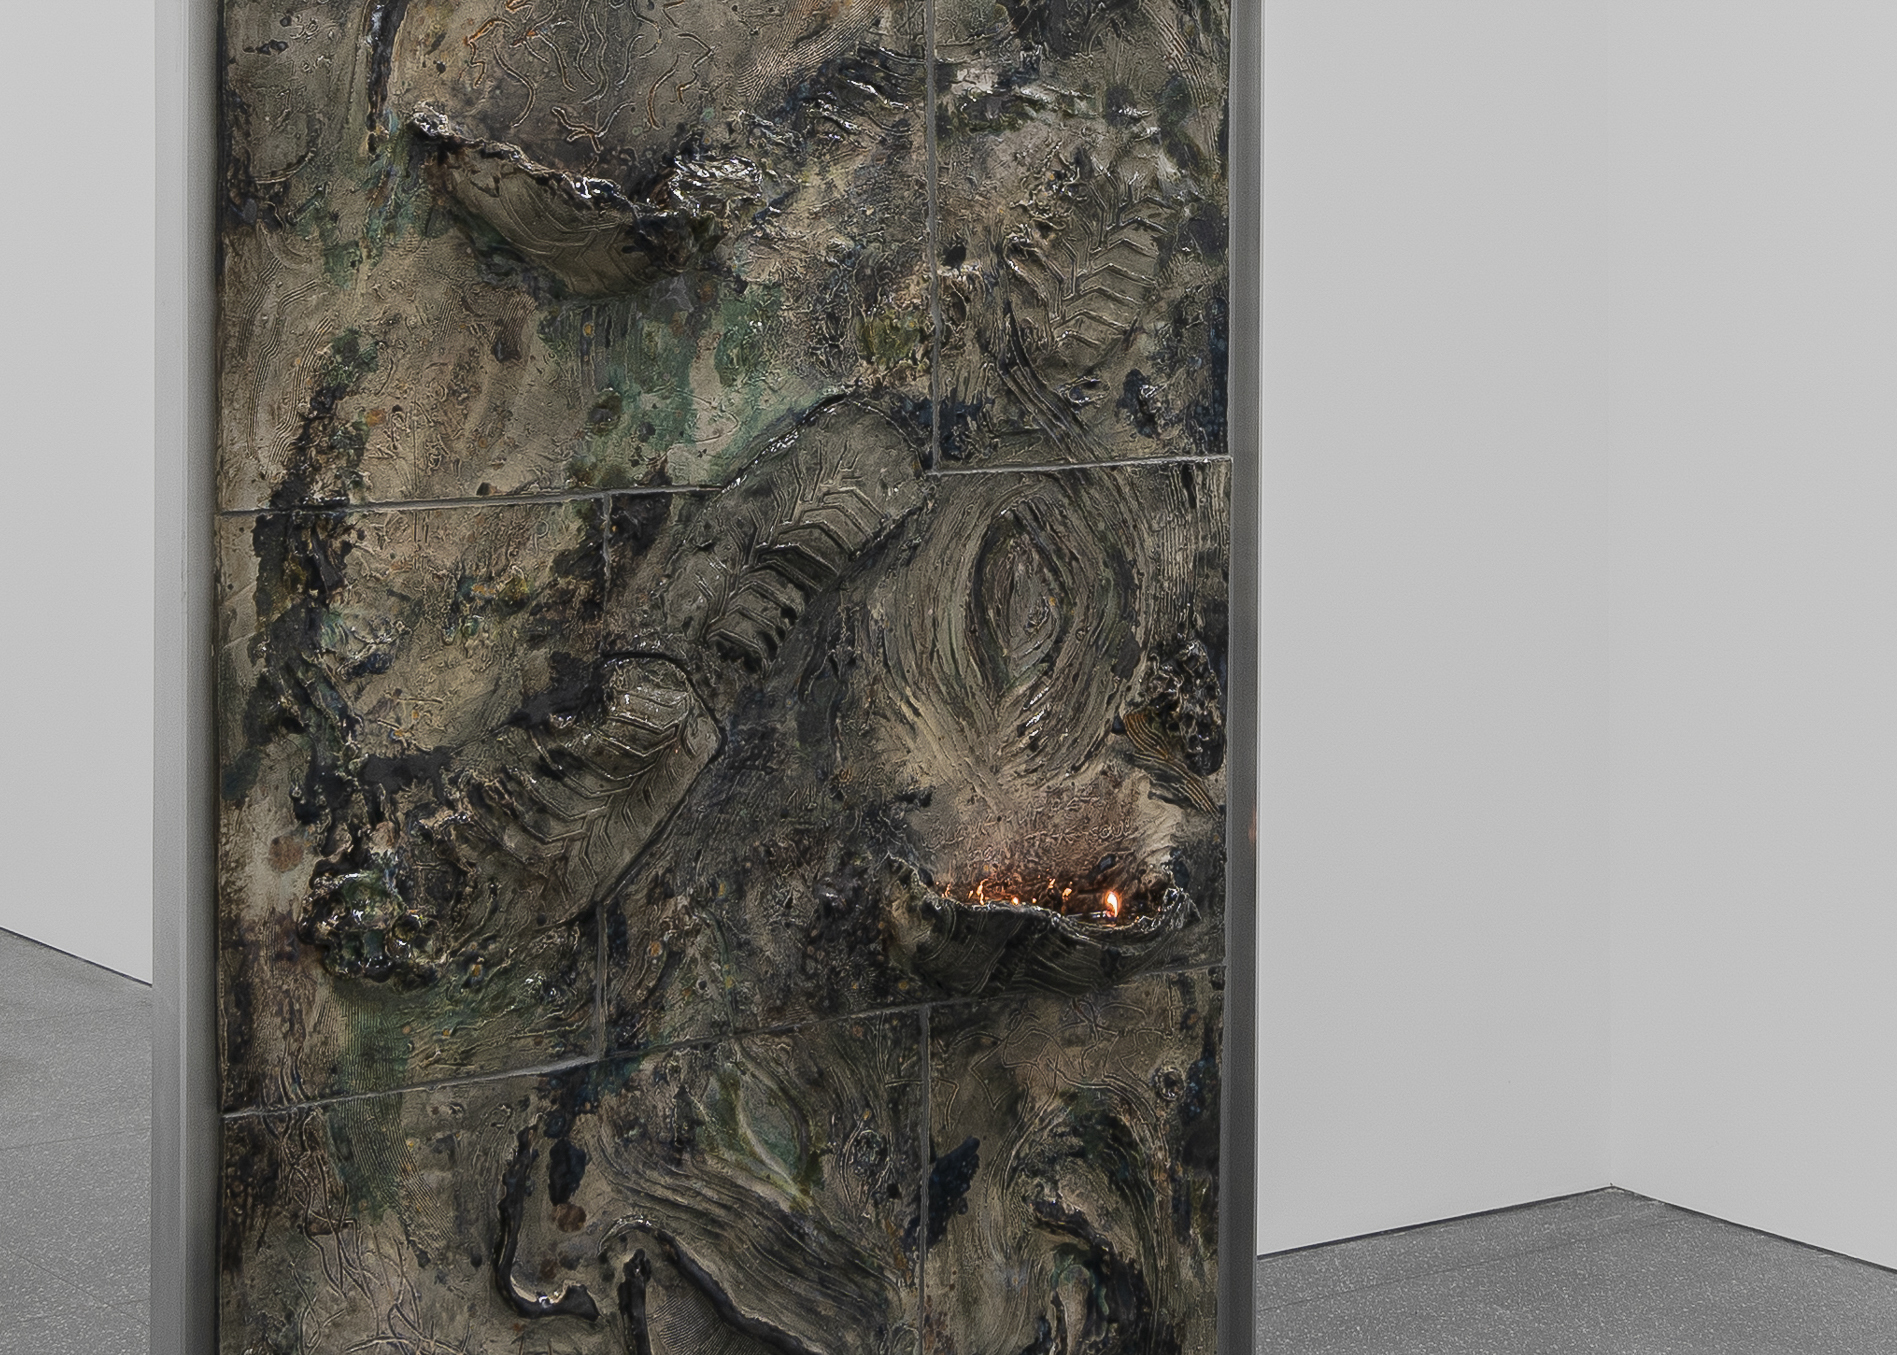 Detail, Drunk on loneliness, 2020, glazed ceramic and aluminium, 160 x 87.5 x 17 cm